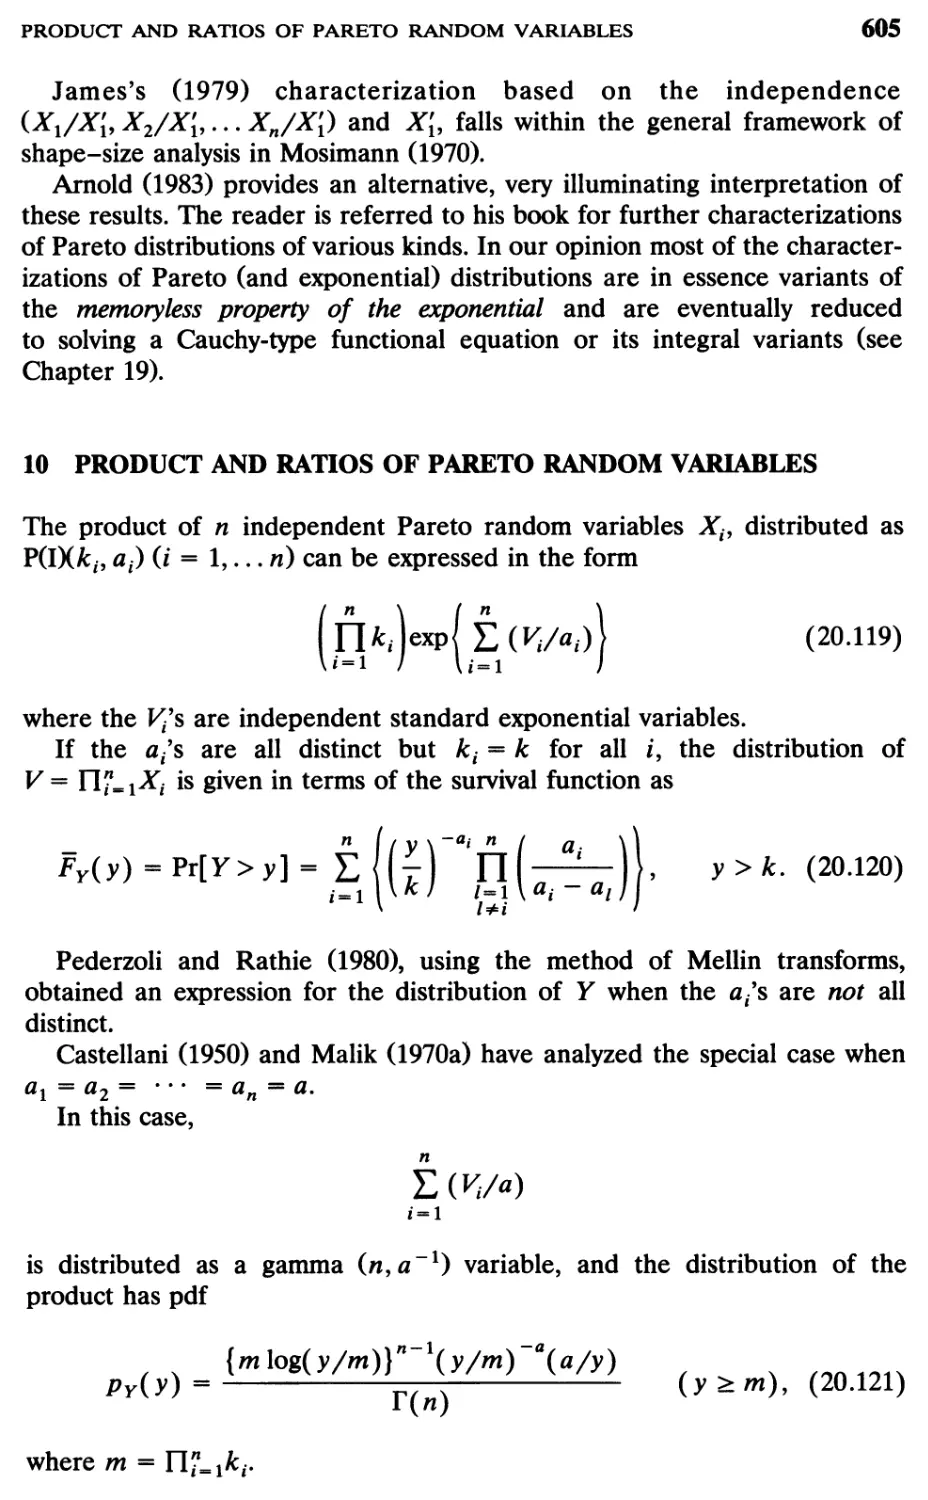 10 Product and Ratios of Pareto Random Variables, 605